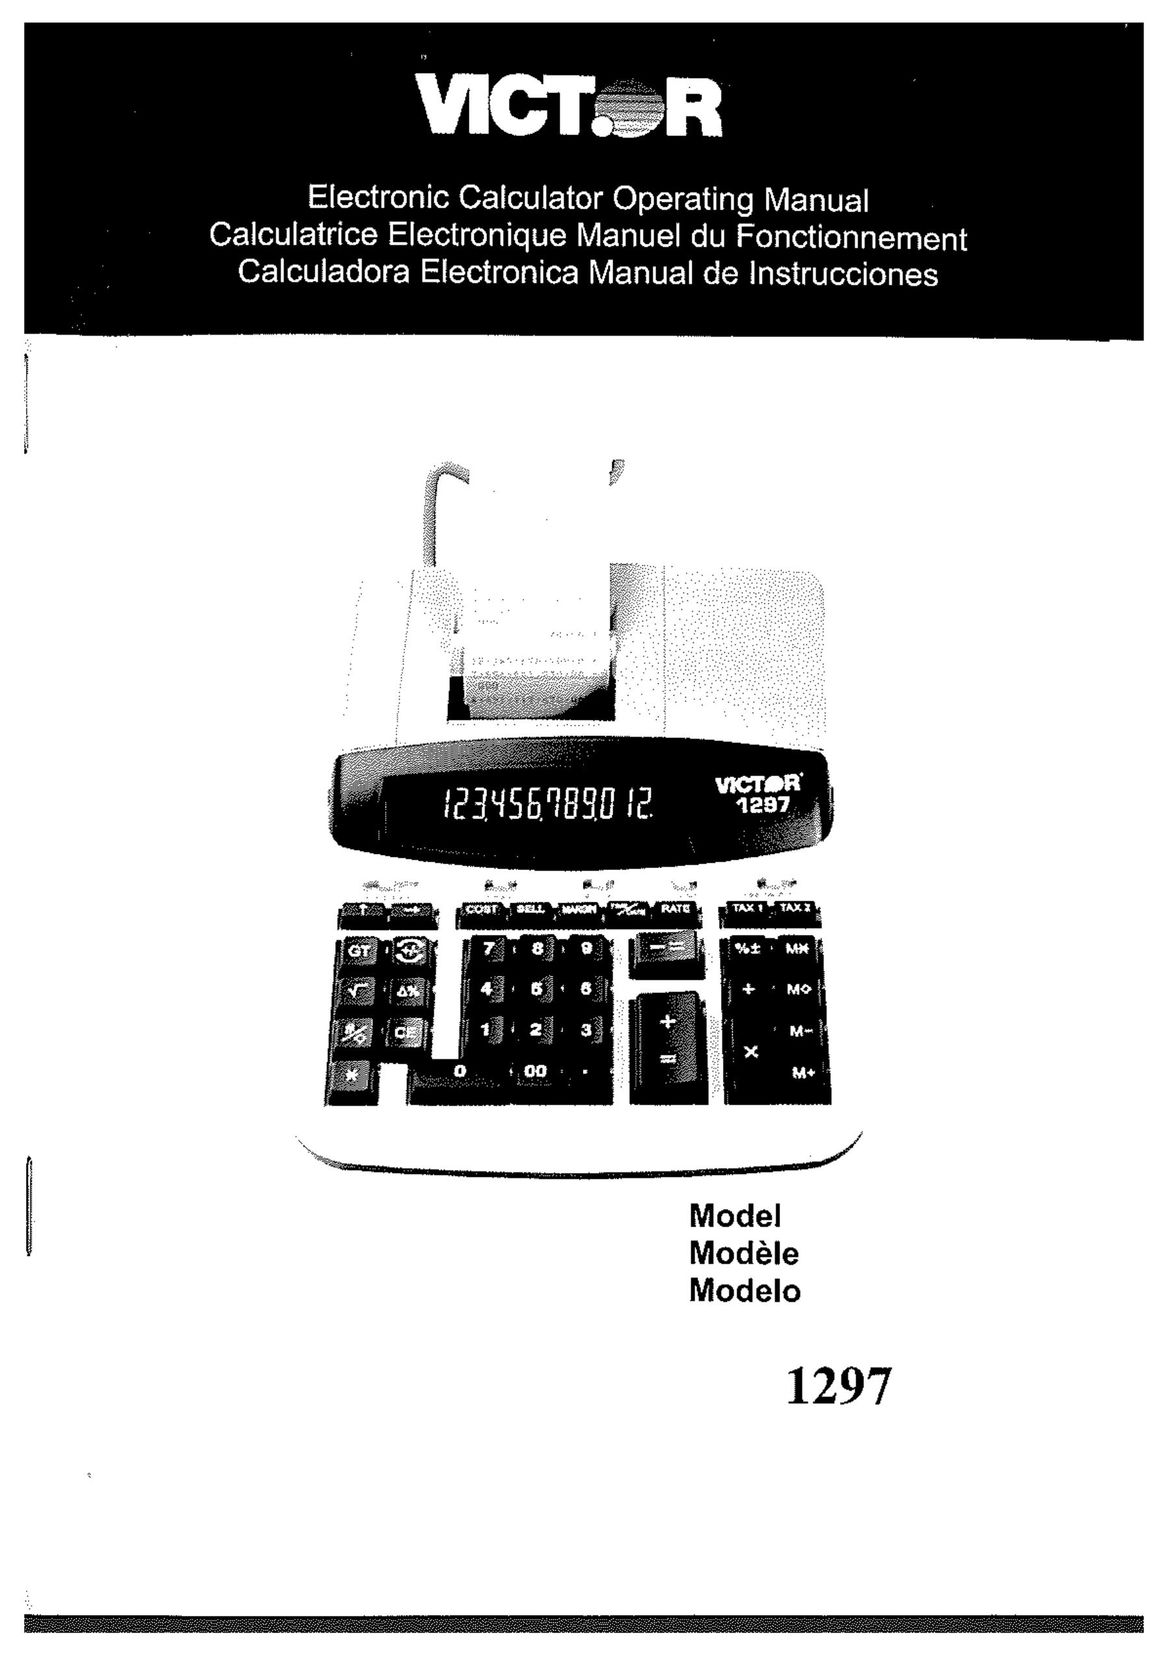 Victor 1297 Calculator User Manual